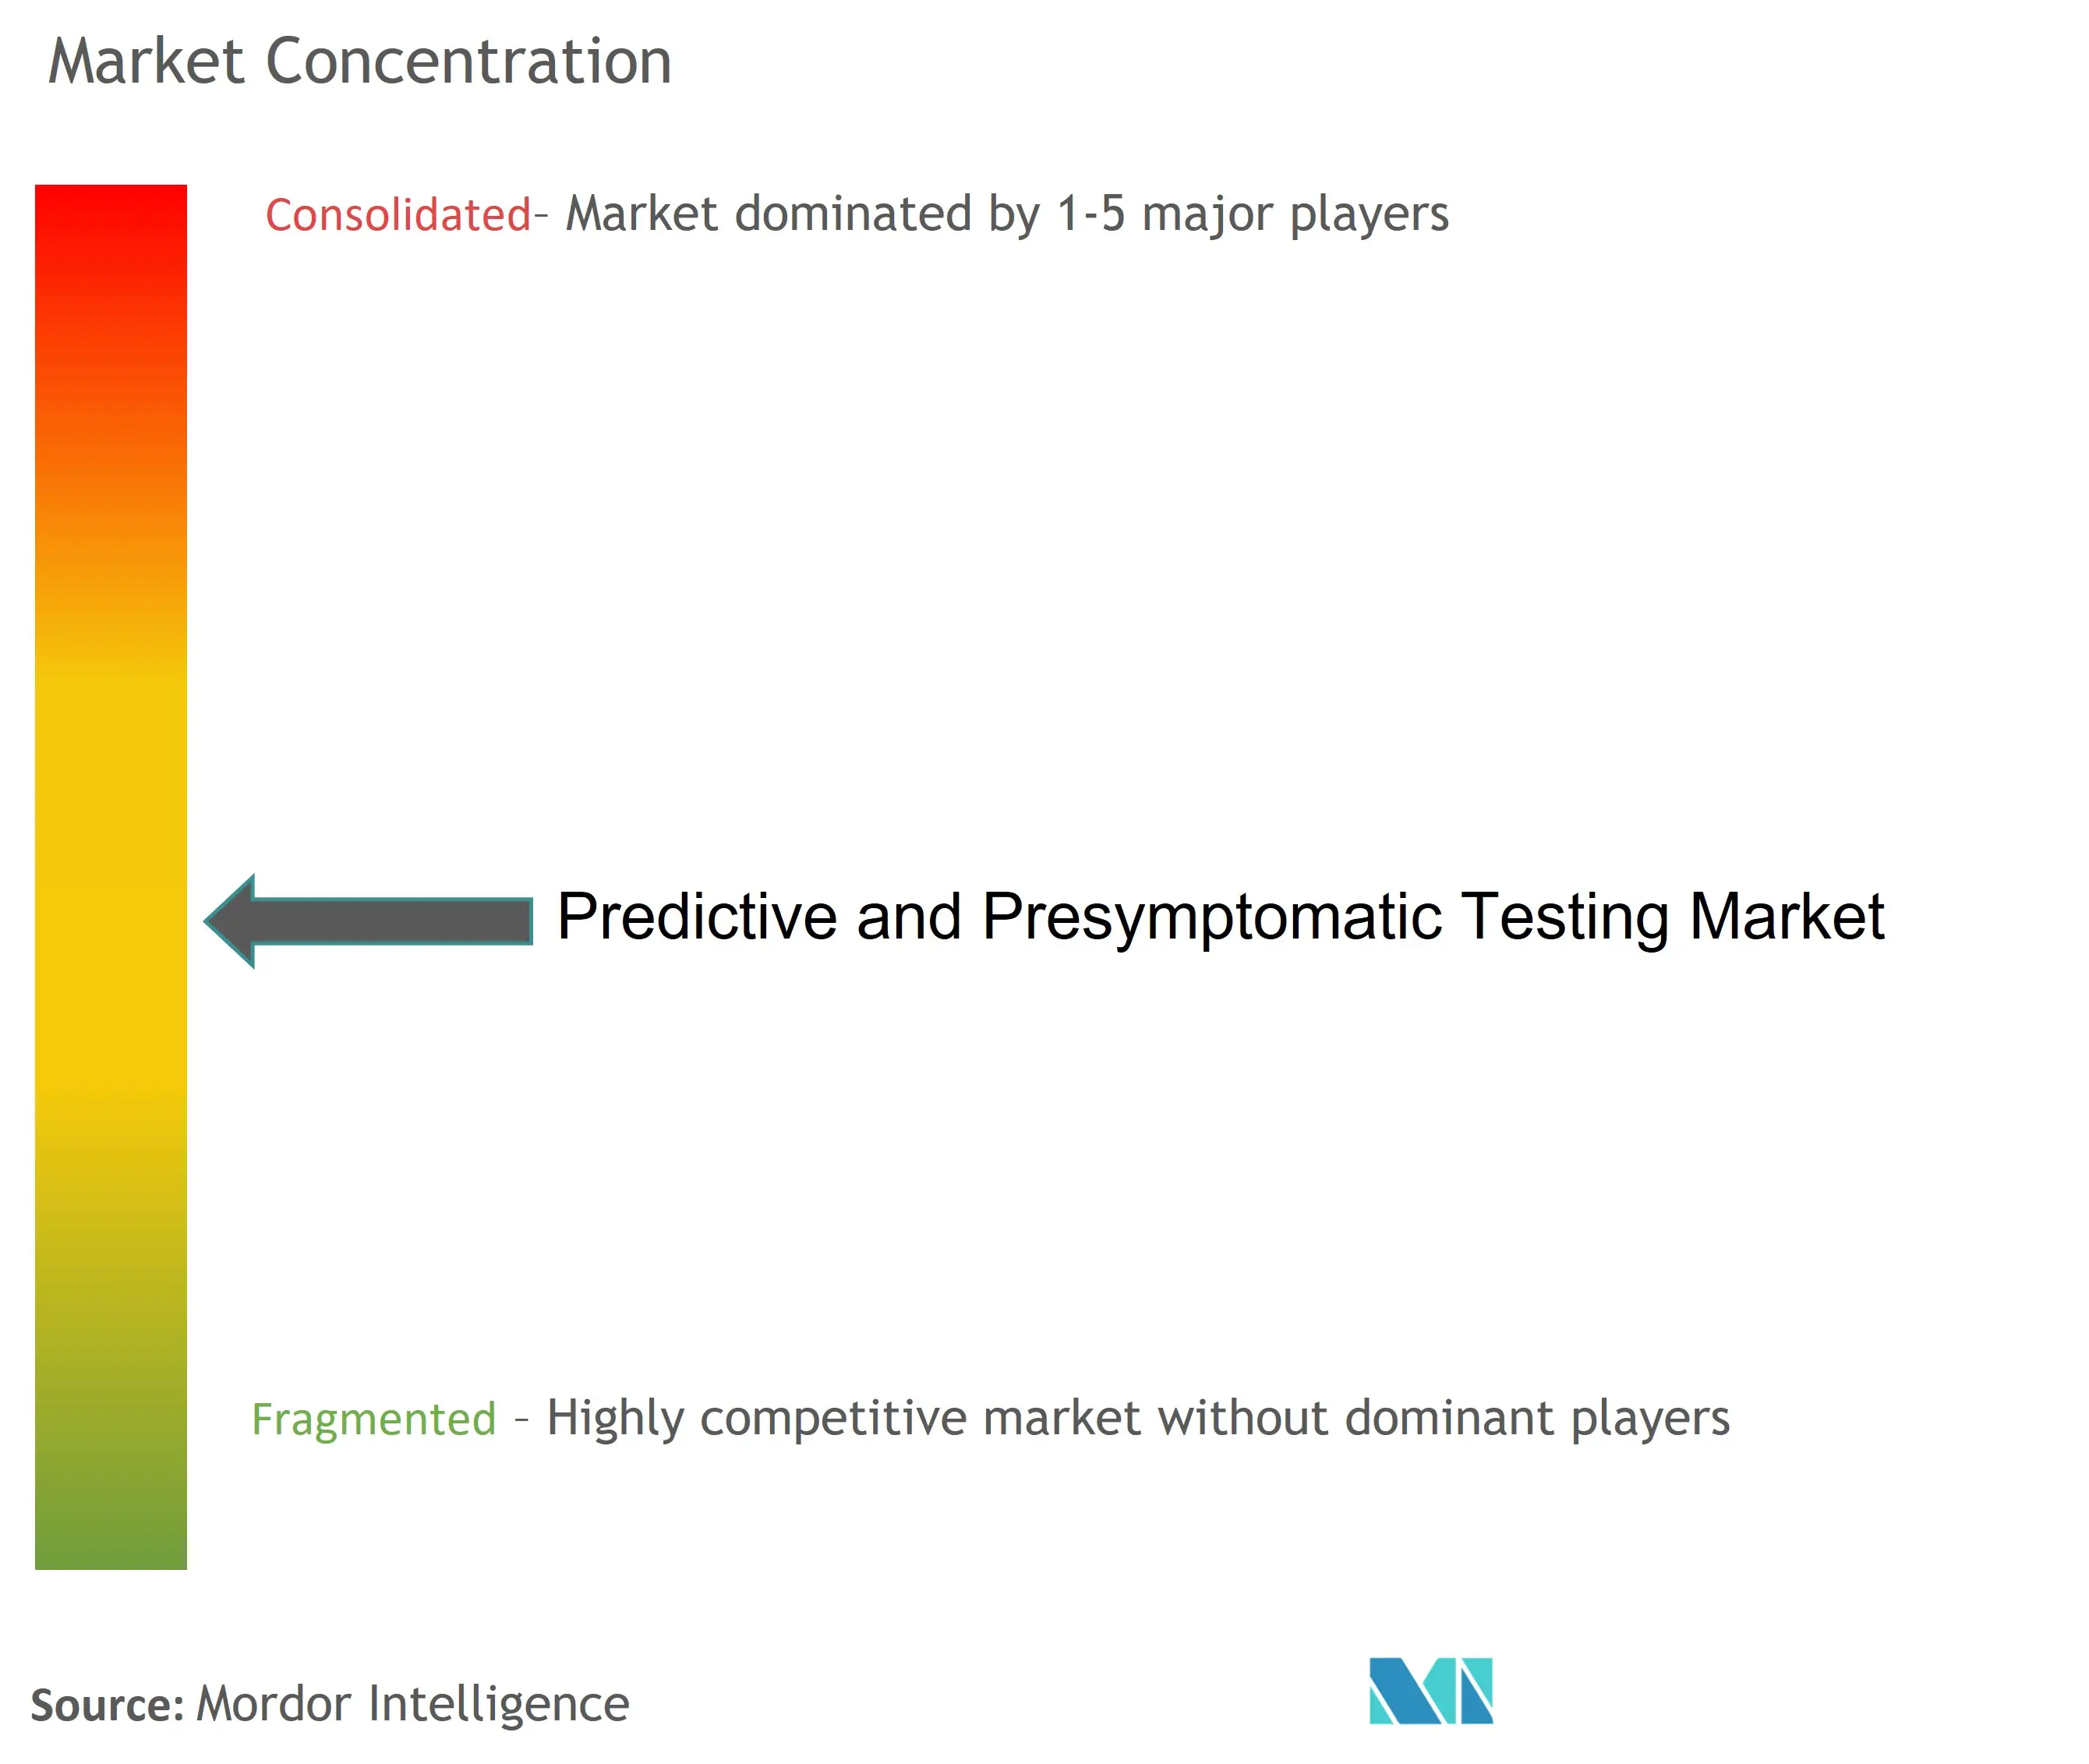 Predictive and Presymptomatic Testing Market Concentration